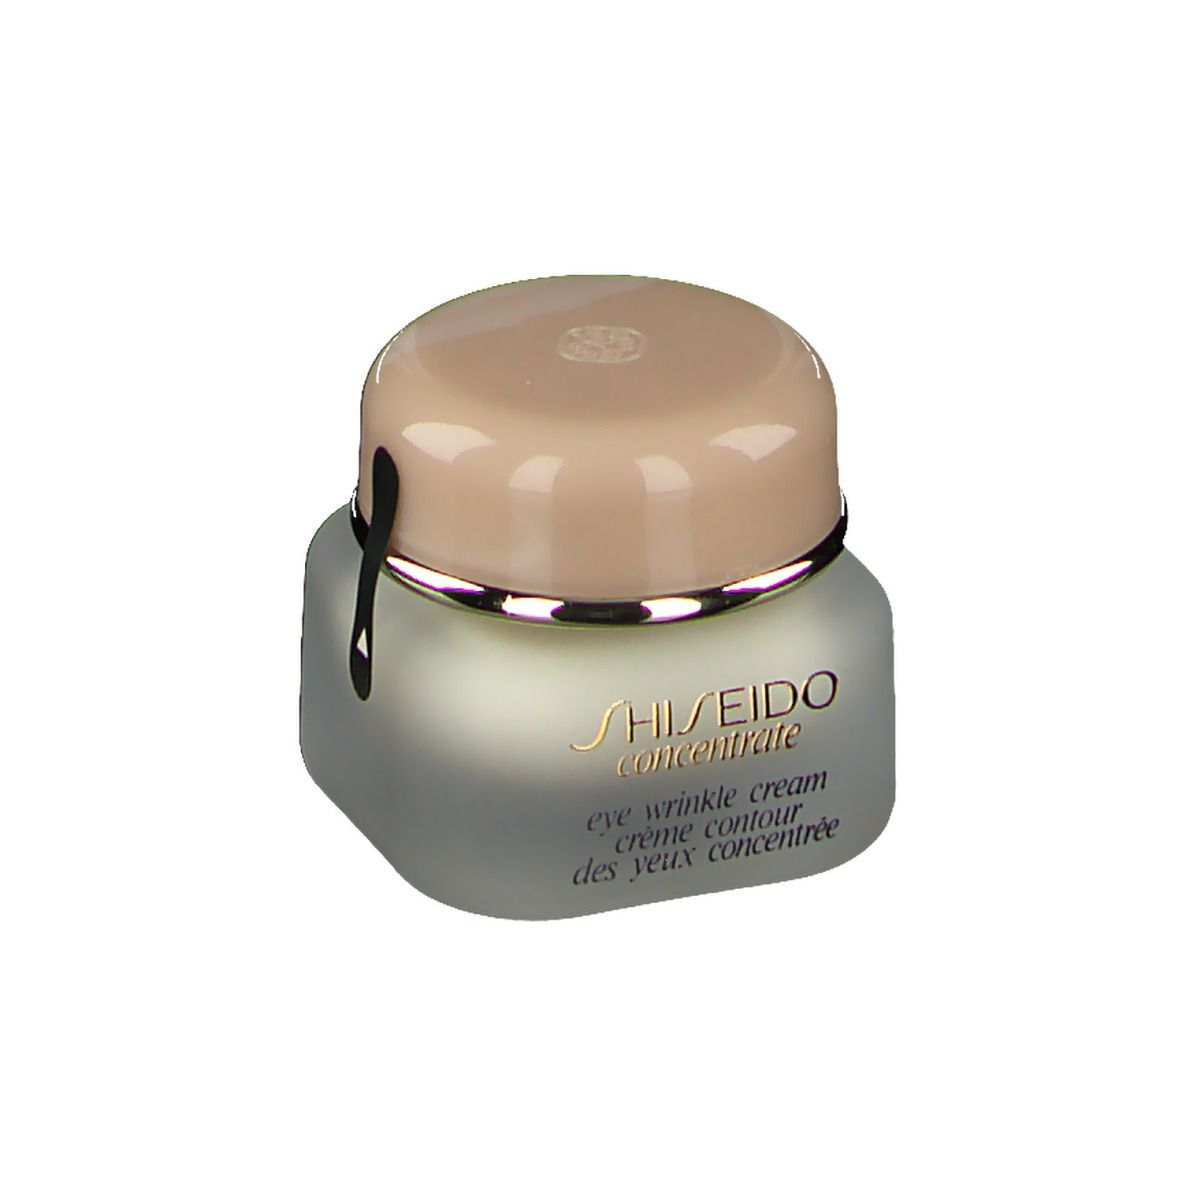 Shiseido Facial Concentrate Eye Wrinkle Cream